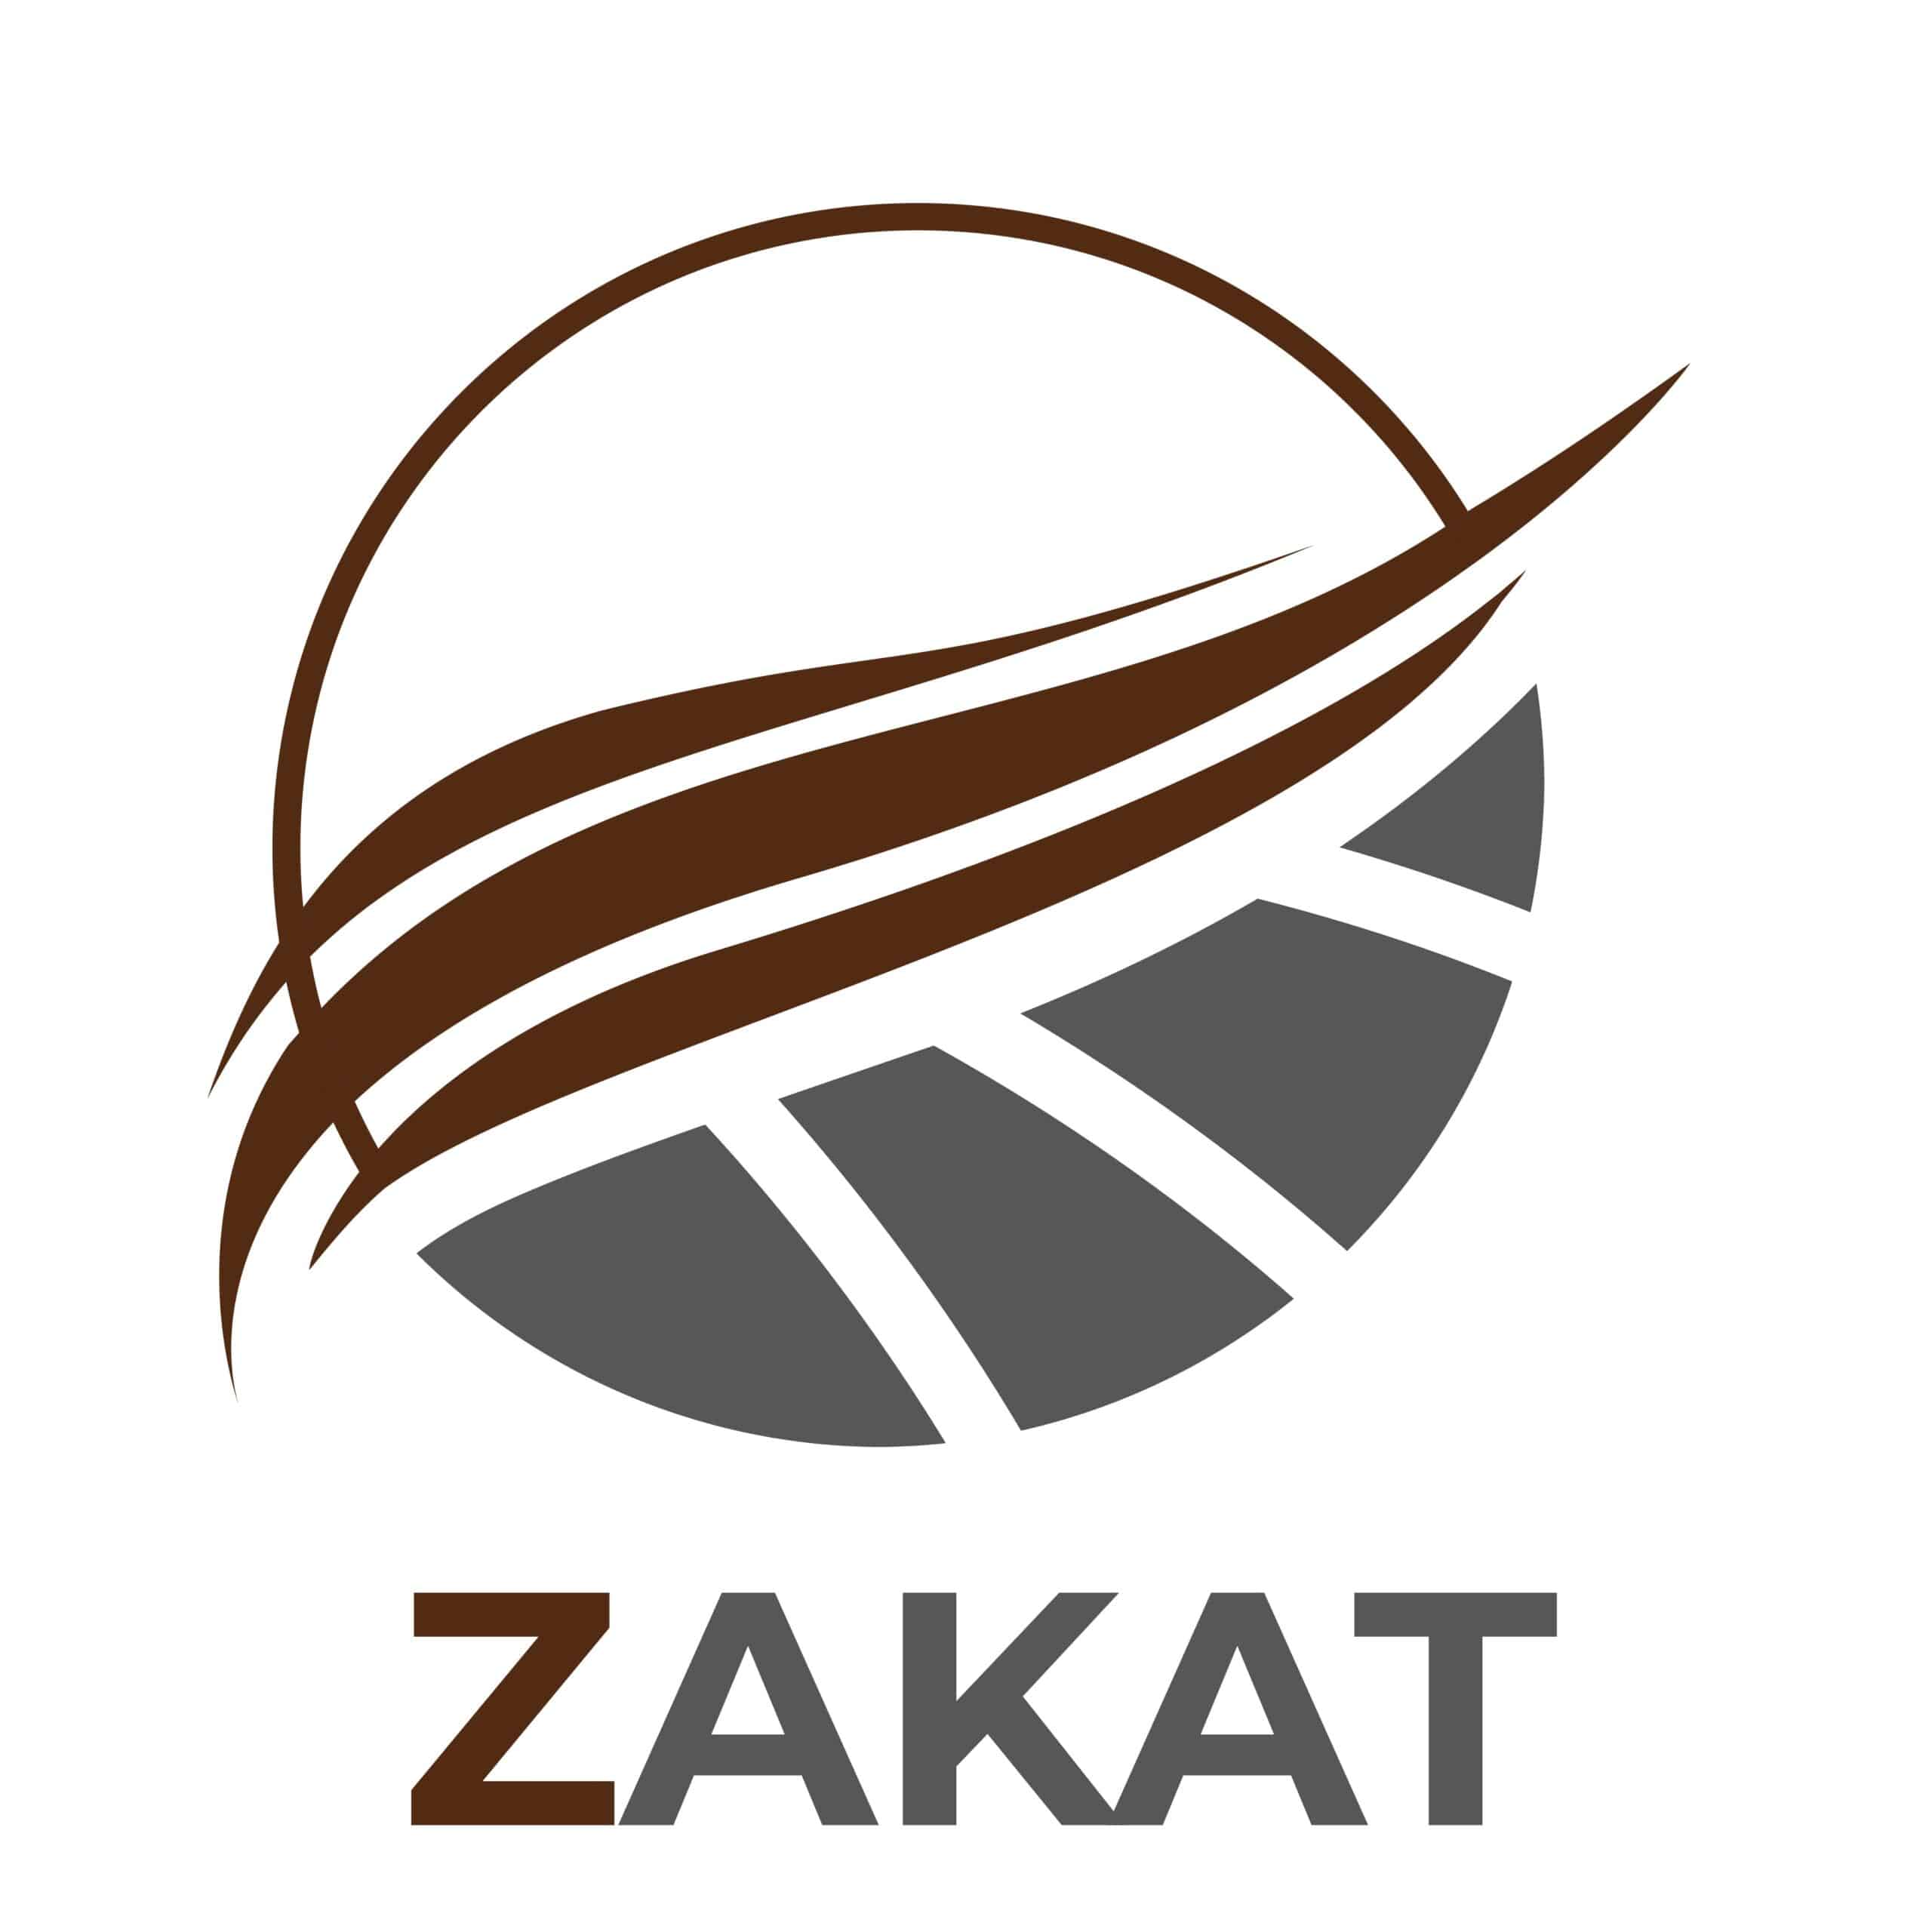 Logos ESSEEDS Logo Zakat grande scaled